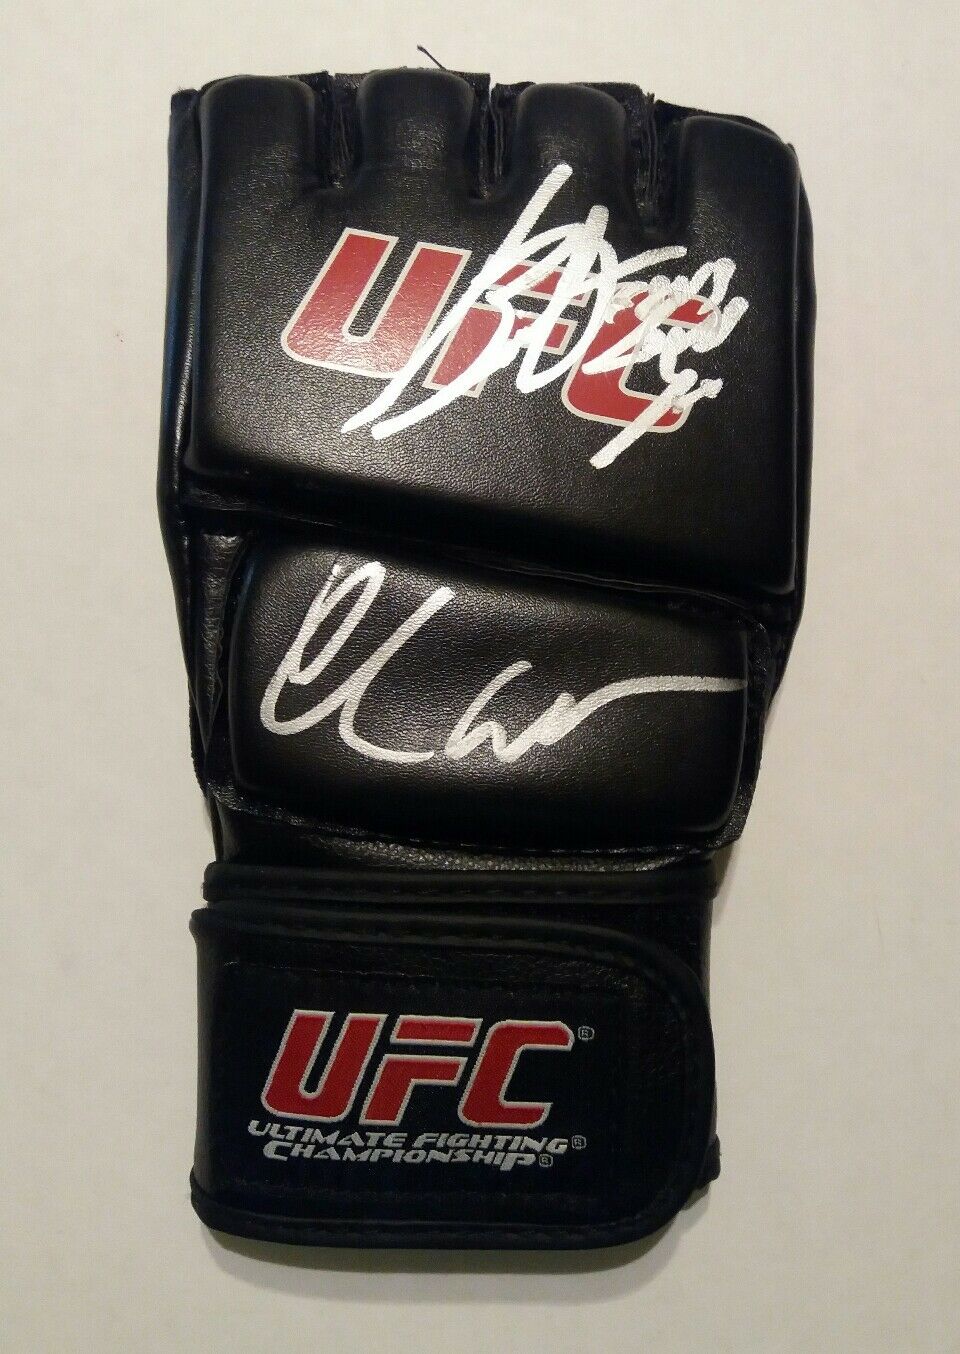 Vitor Belfort & Chris Weidman “dual”! Auto/signed Ufc Glove!!! Authentic!! Rare!